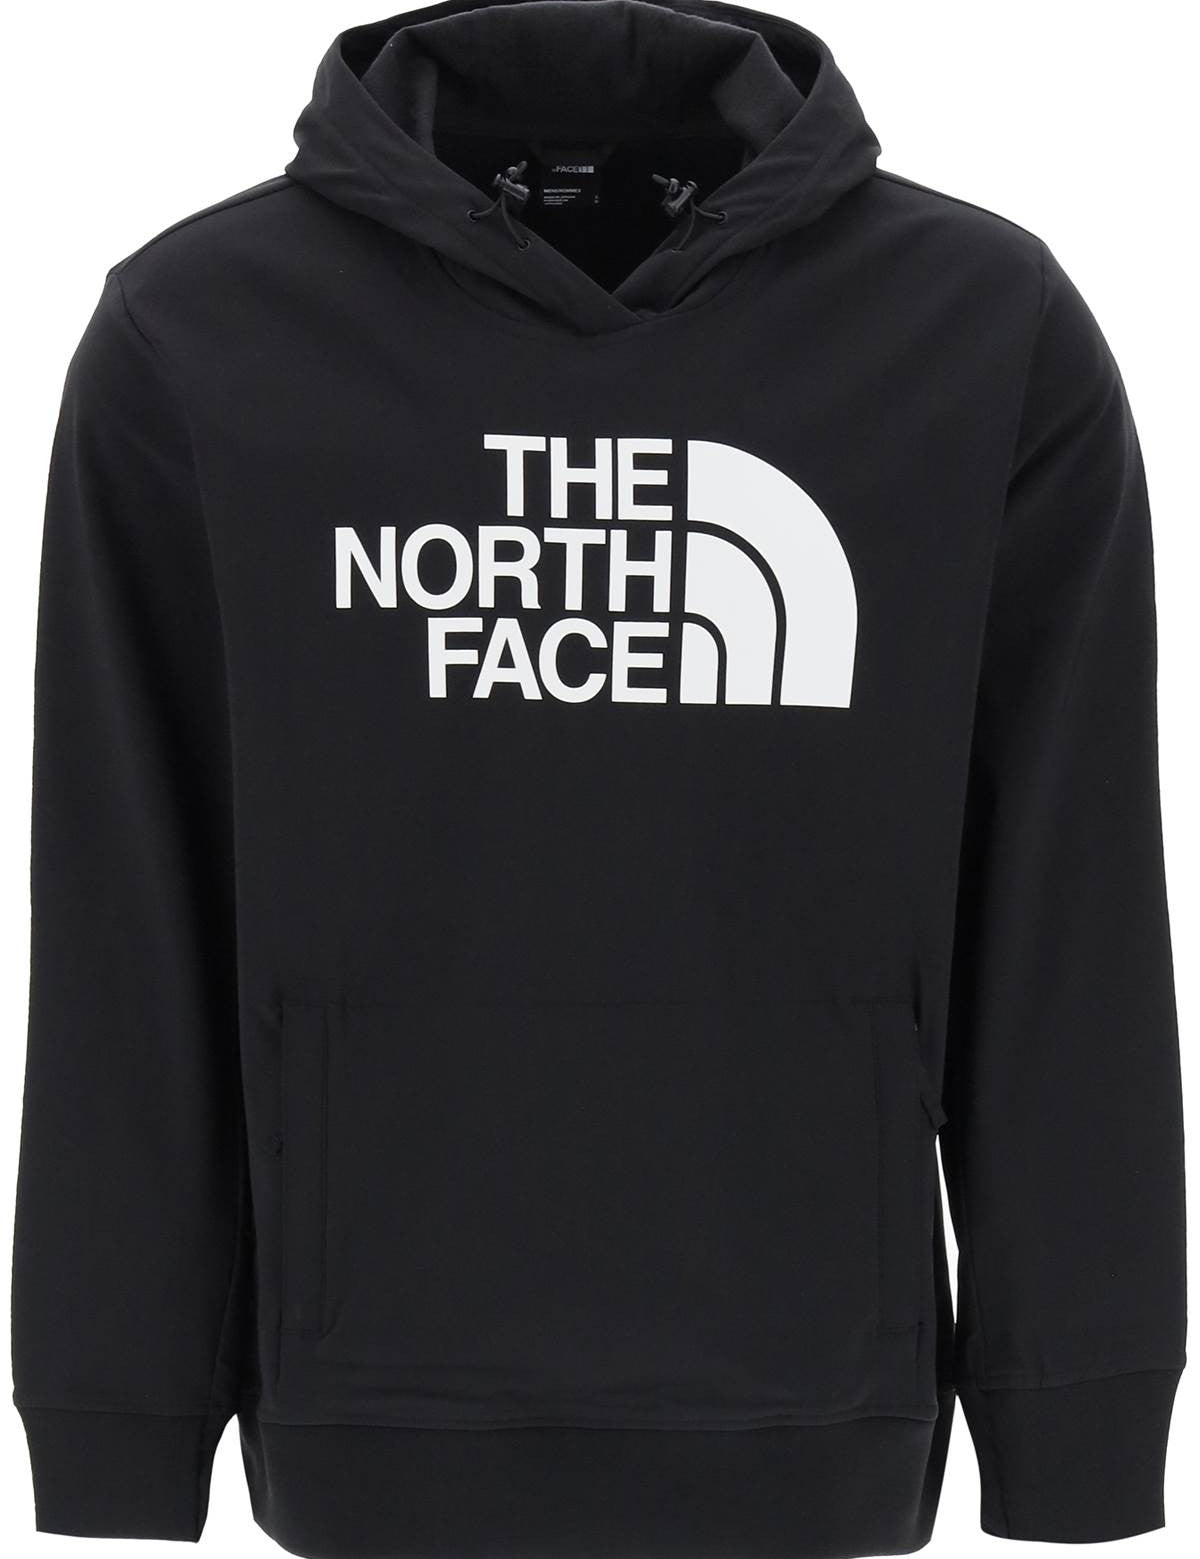 the-north-face-techno-hoodie-with-logo-print_0728a7d3-610a-44ab-a448-2987870e8962.jpg